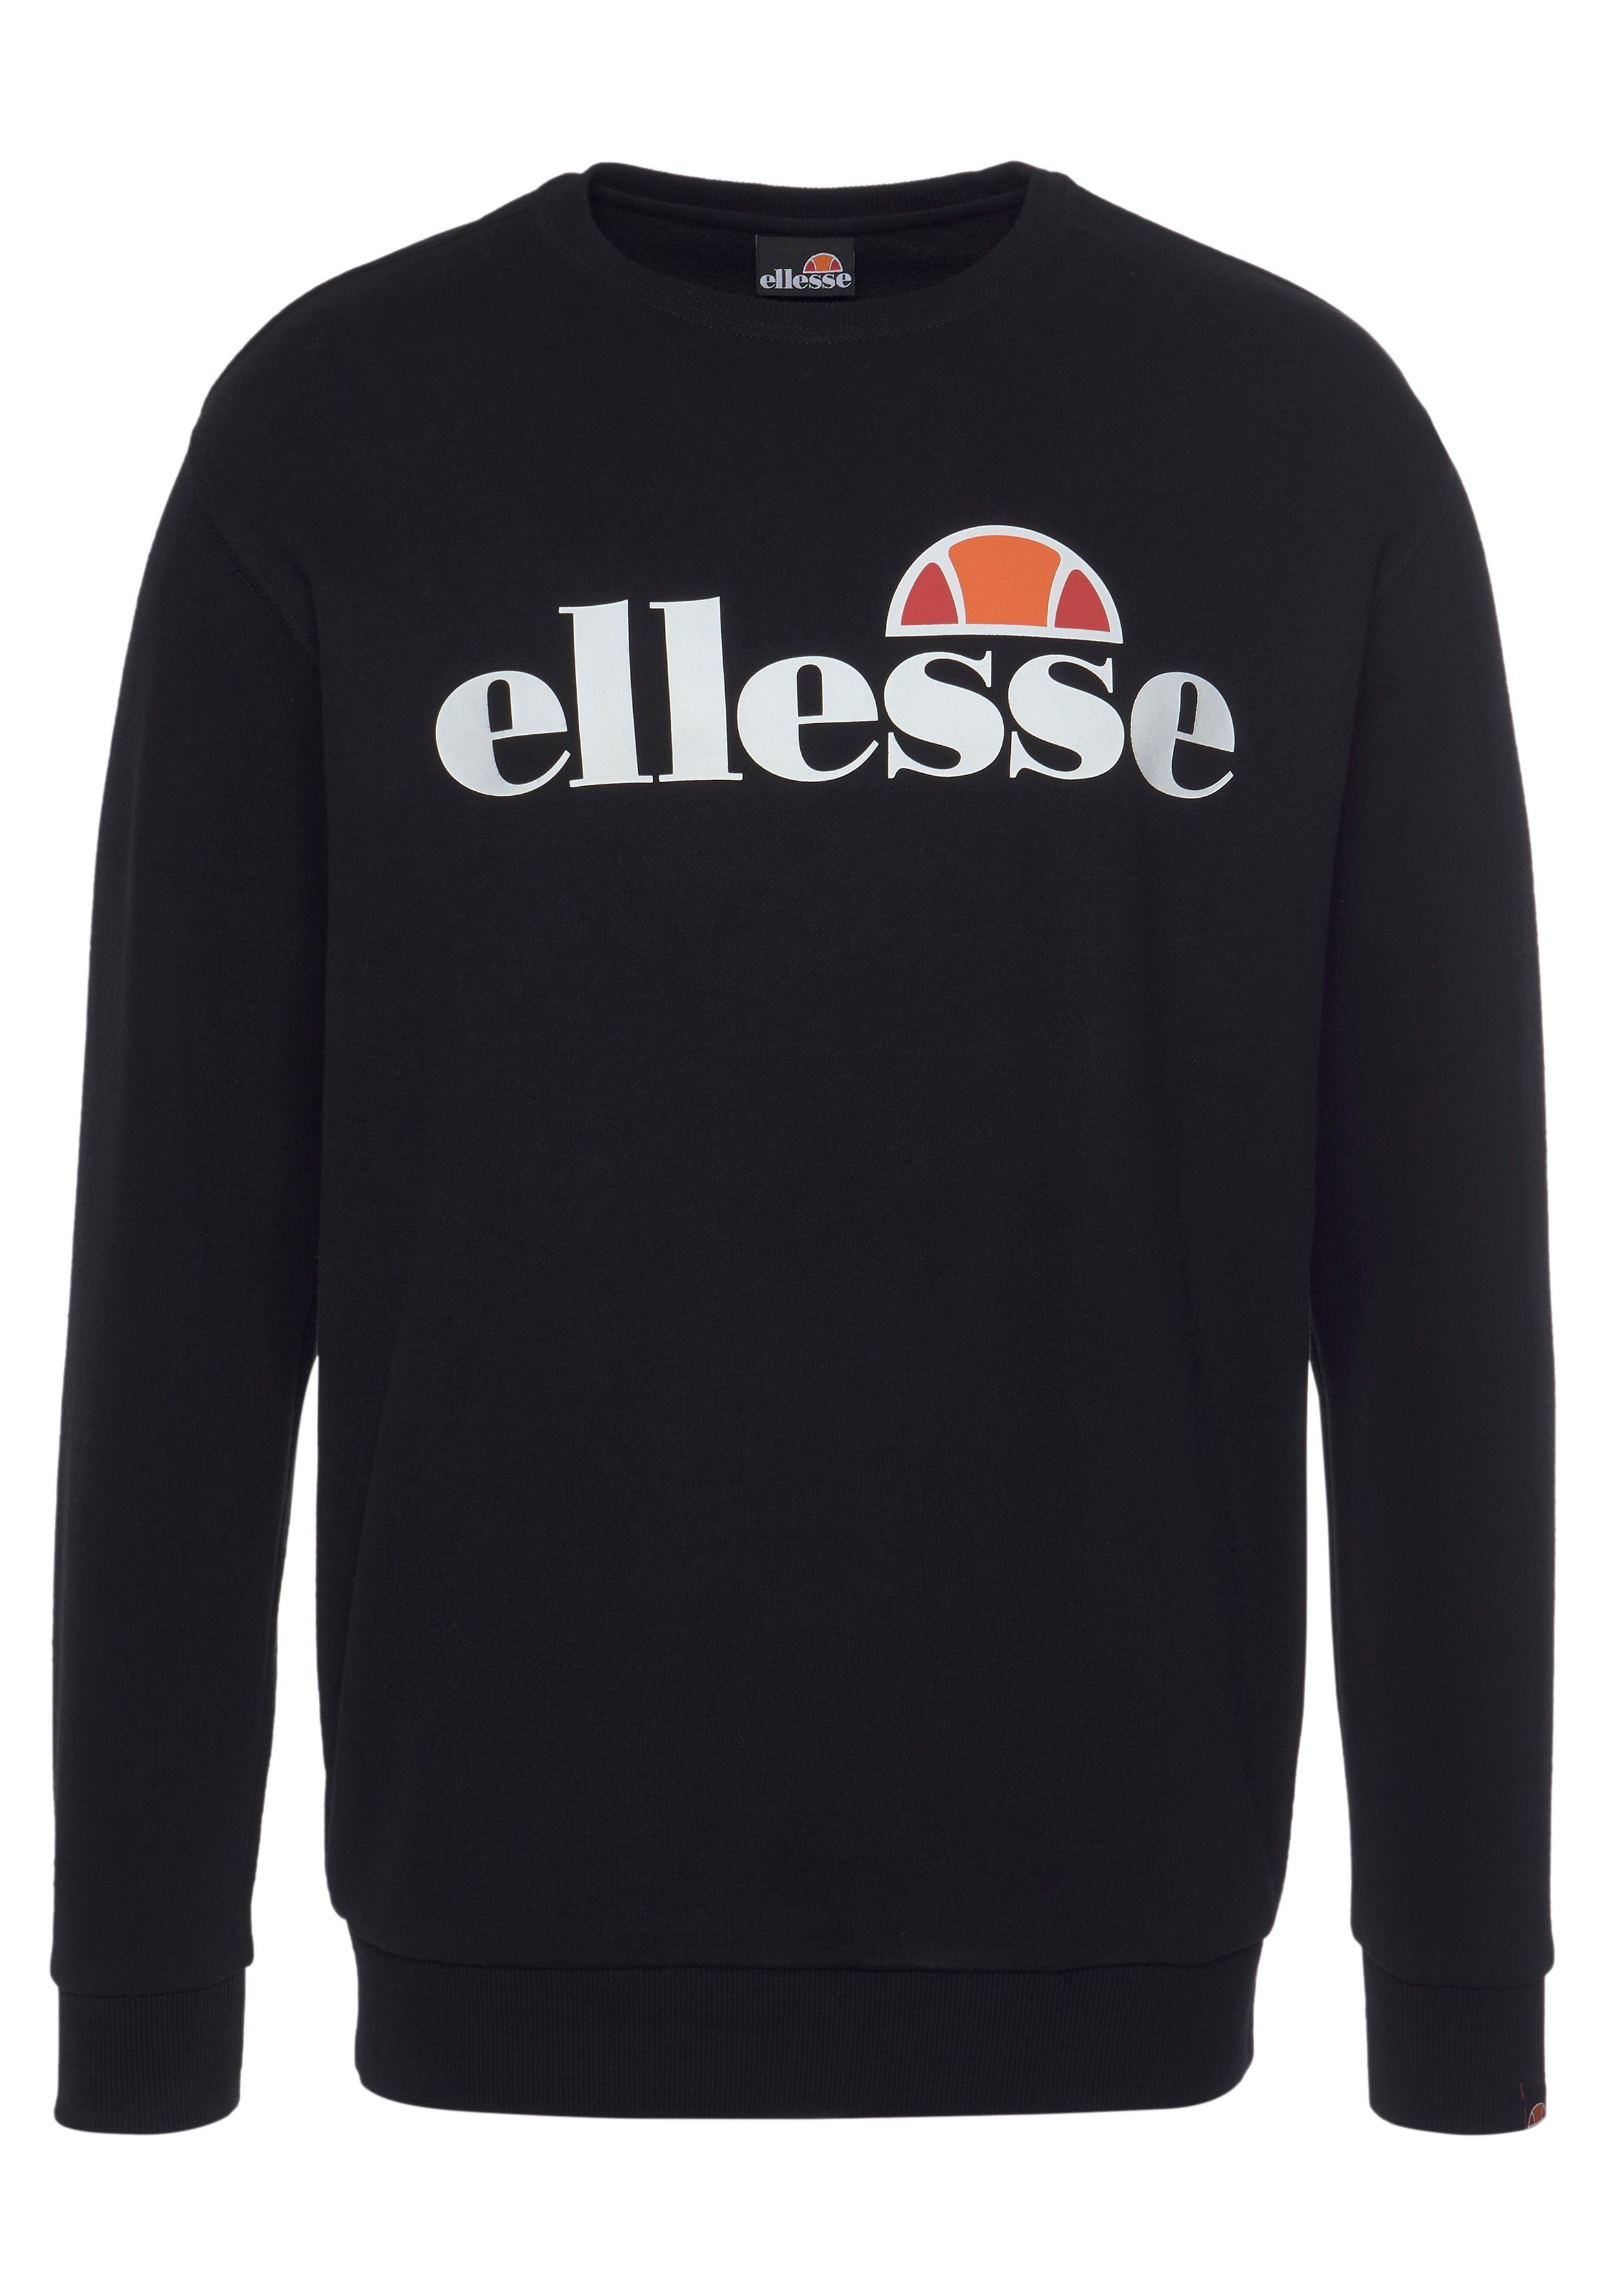 SWEATSHIRT Ellesse SL schwarz SUCCISO Sweatshirt